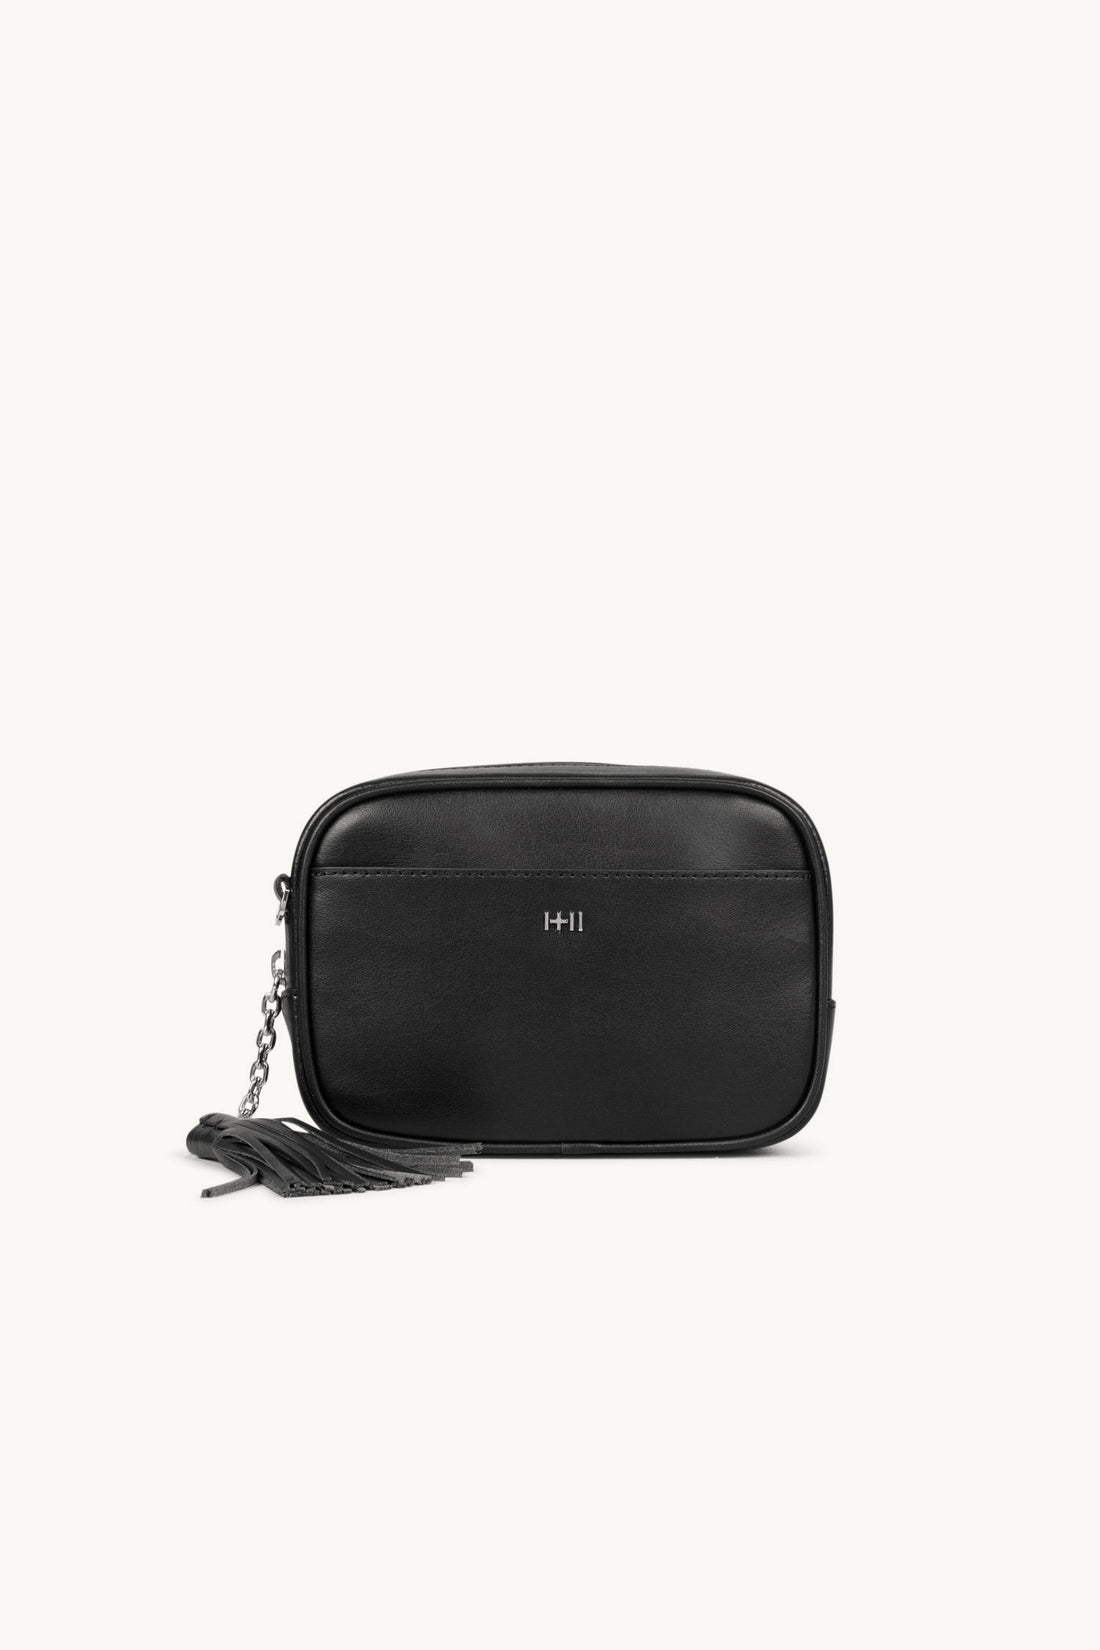 Shop Italian Leather Handbags | Dylan Kain